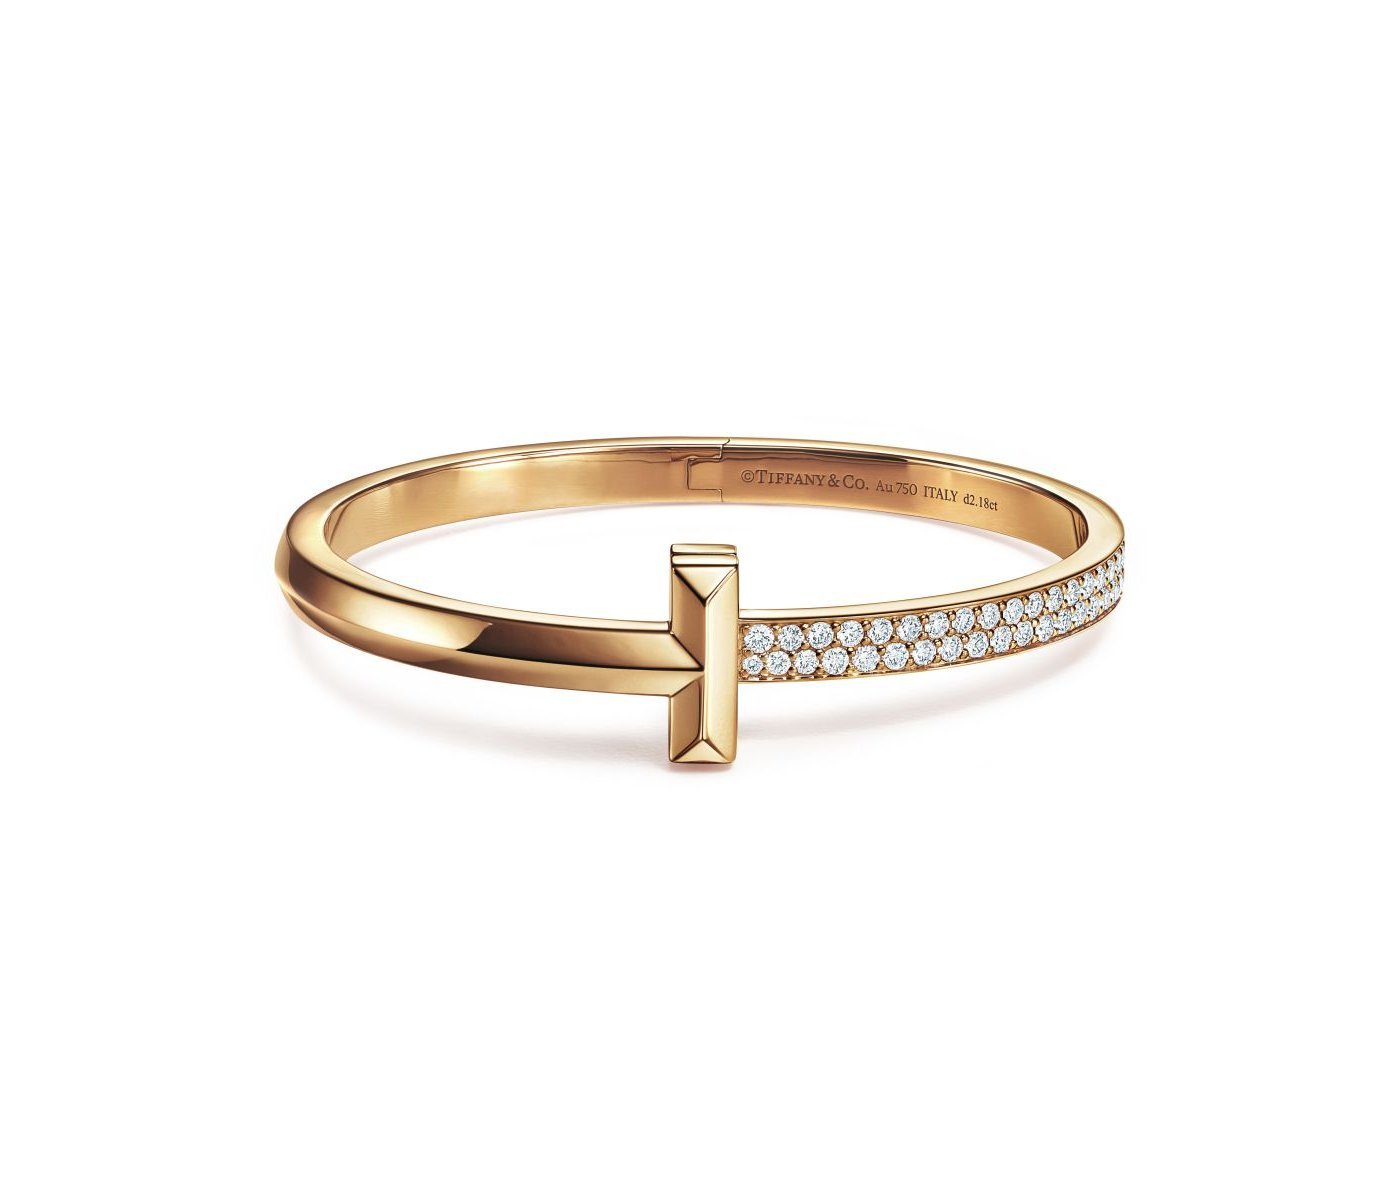 Bracelet by Tiffany & Co